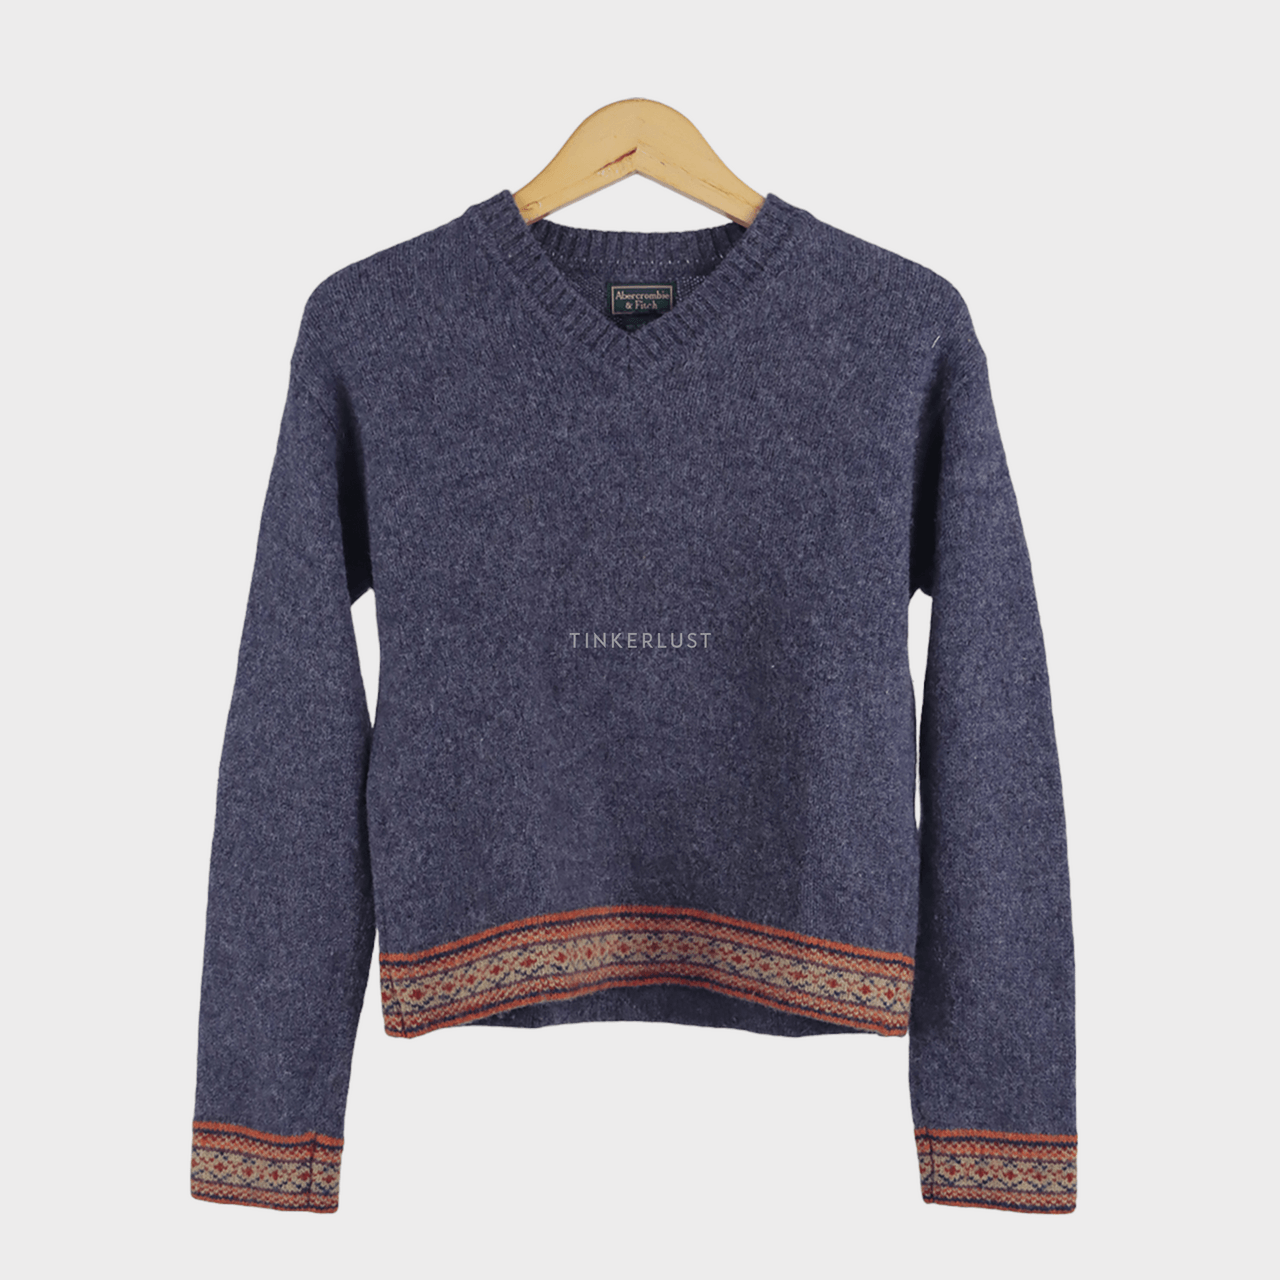 Abercrombie & Fitch Dark Grey Sweater